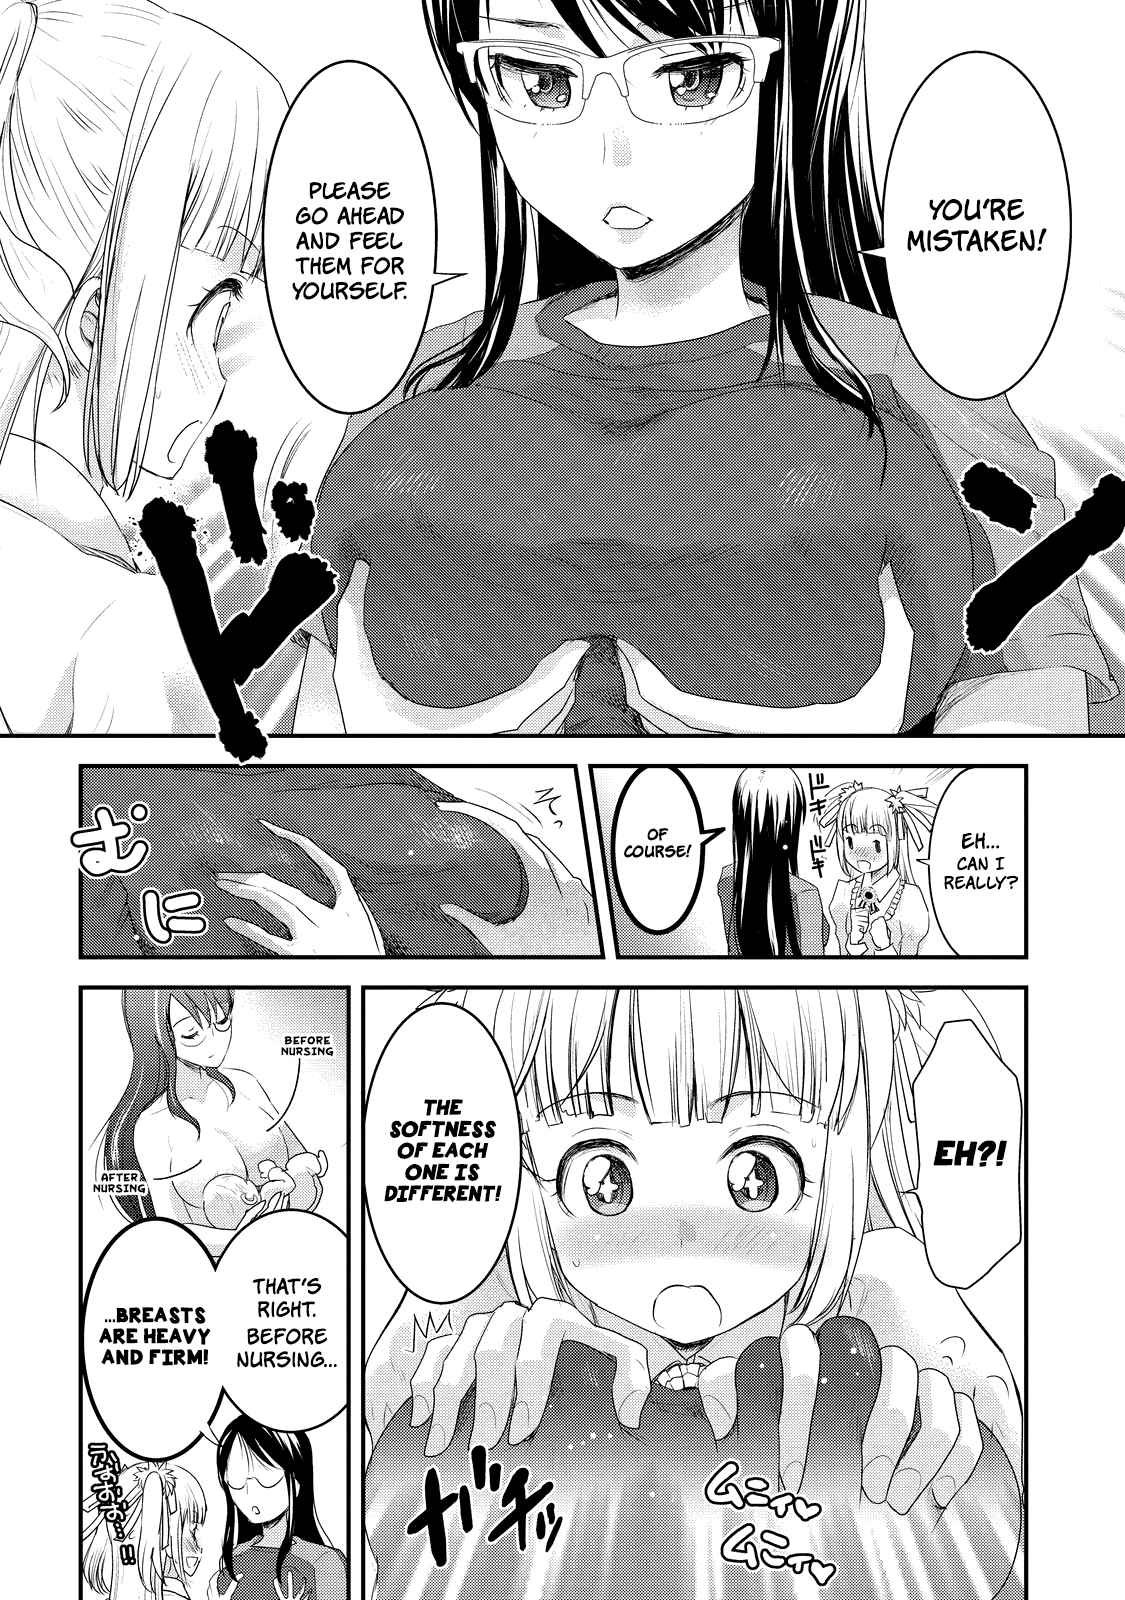 Chichi no Jikan Vol. 1 Ch. 6 Ideal Breasts